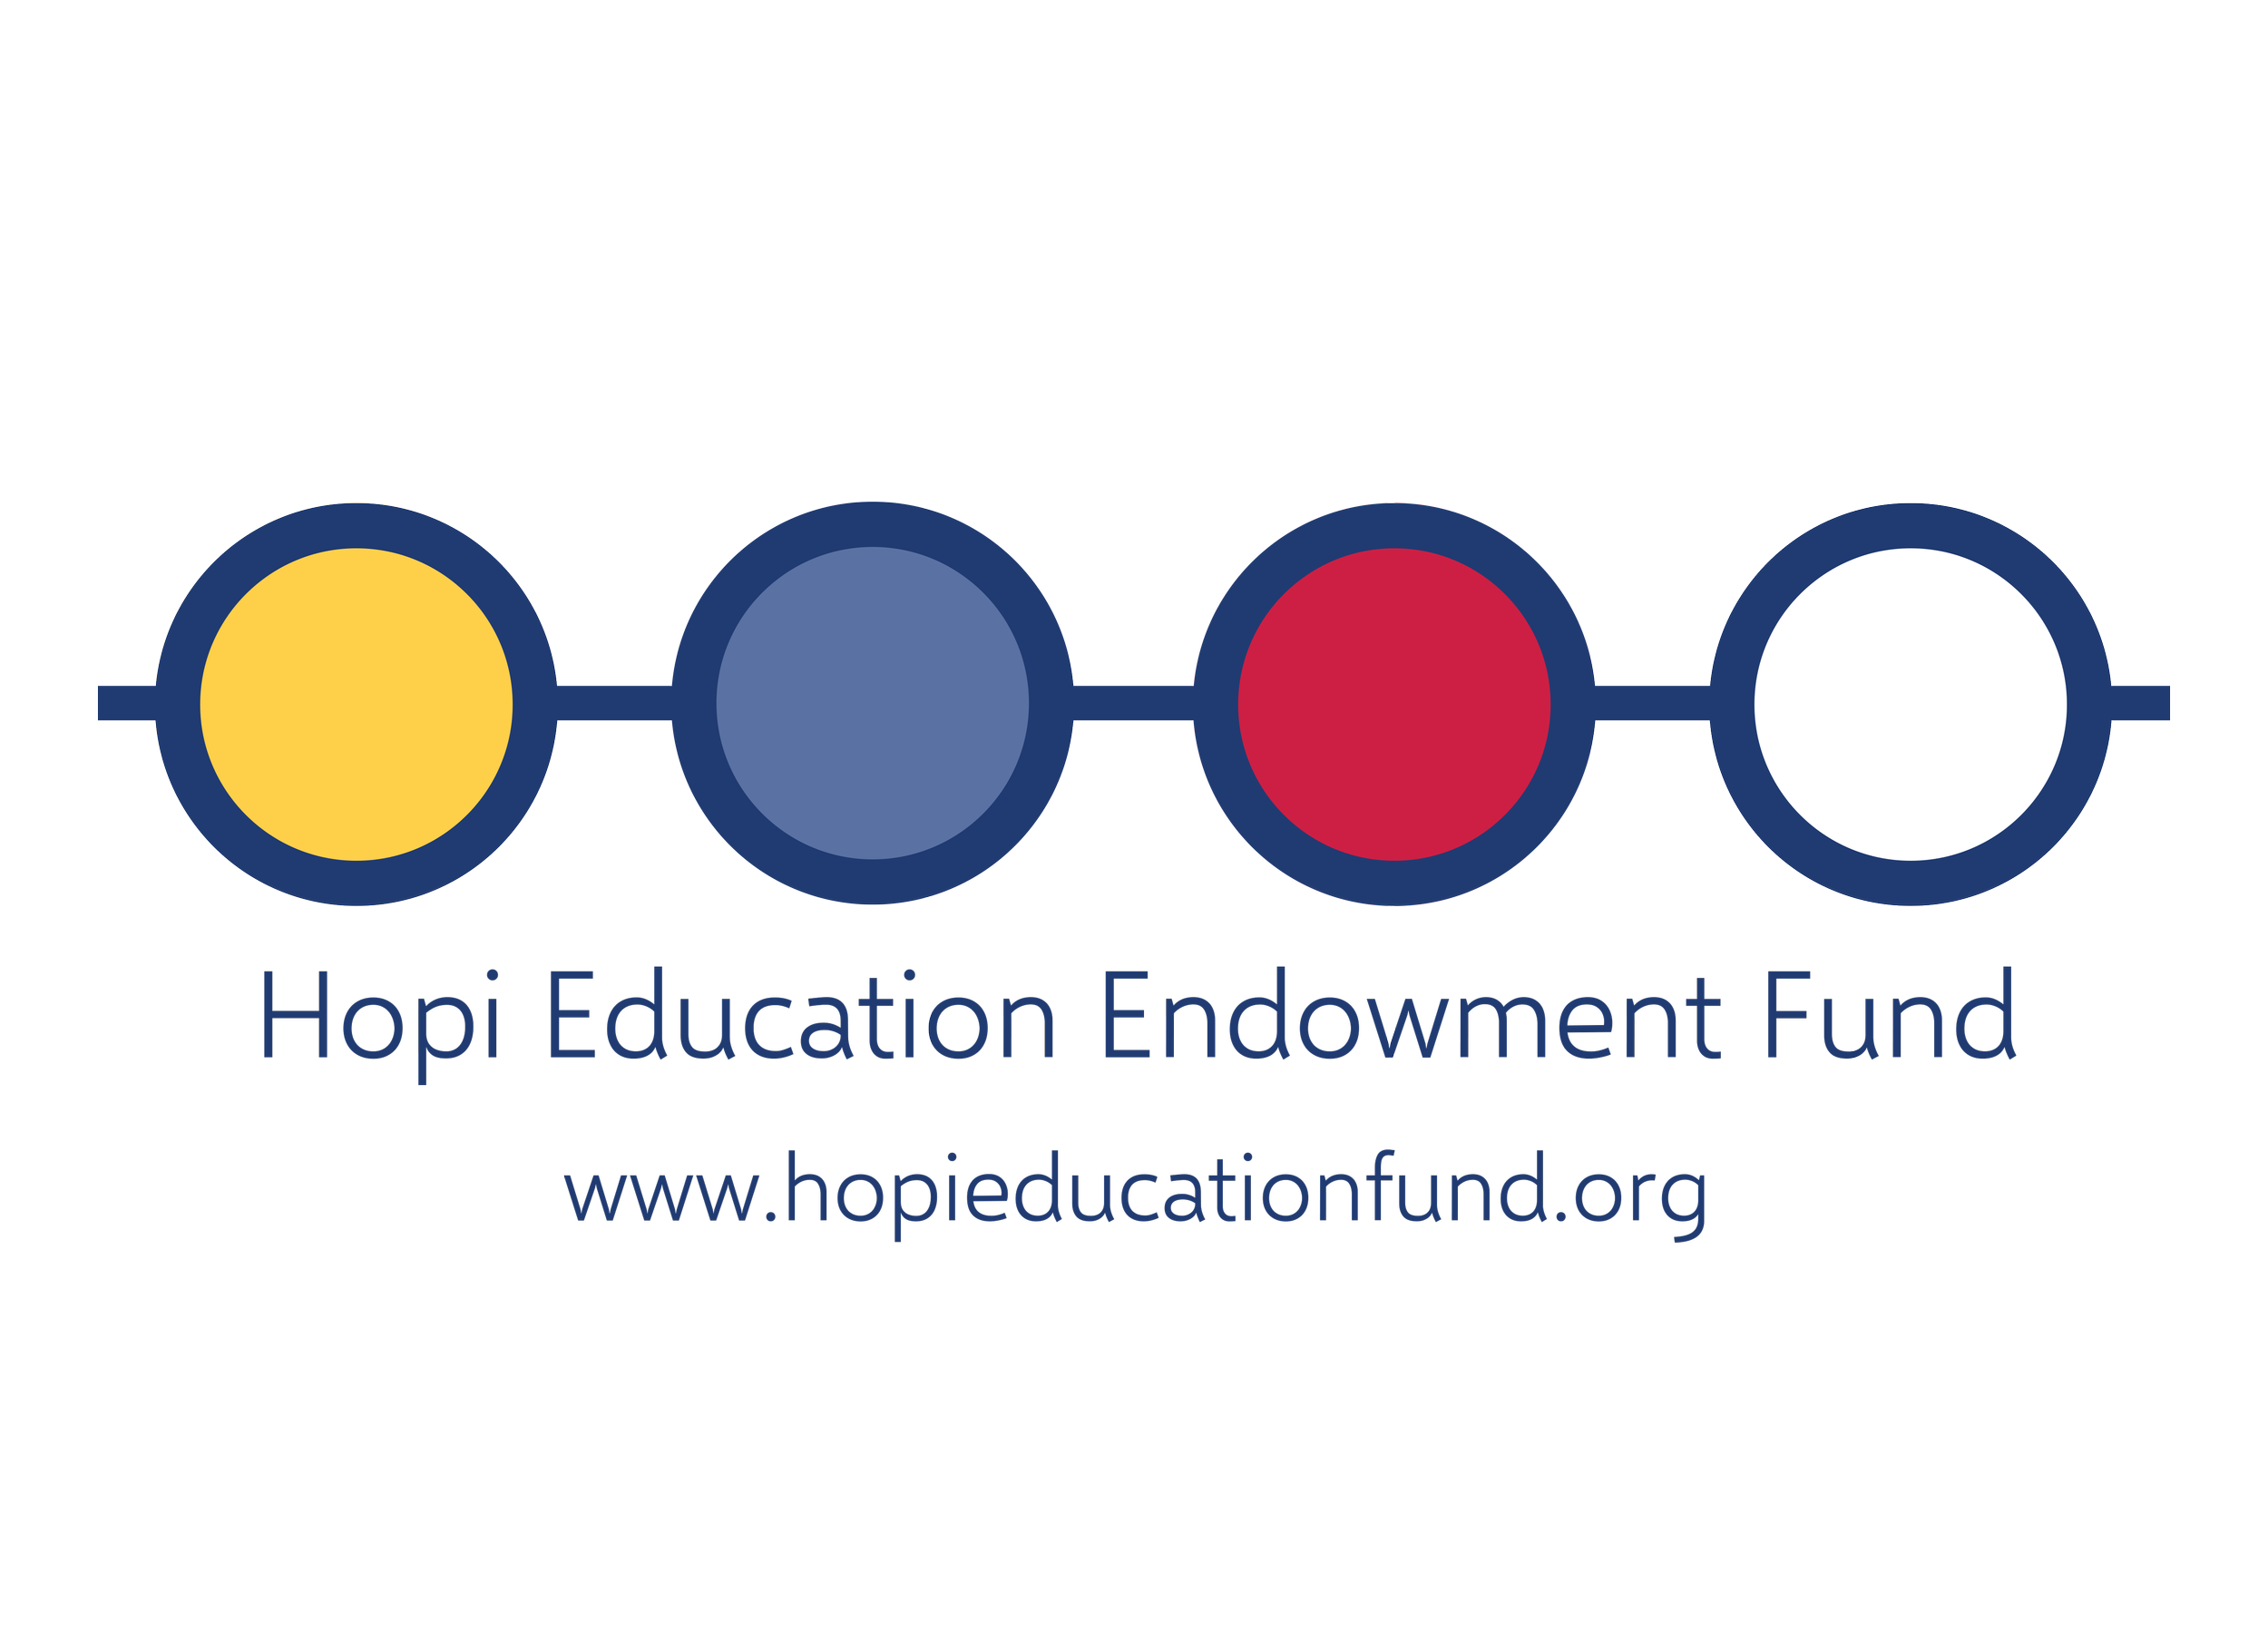 endowment fund education